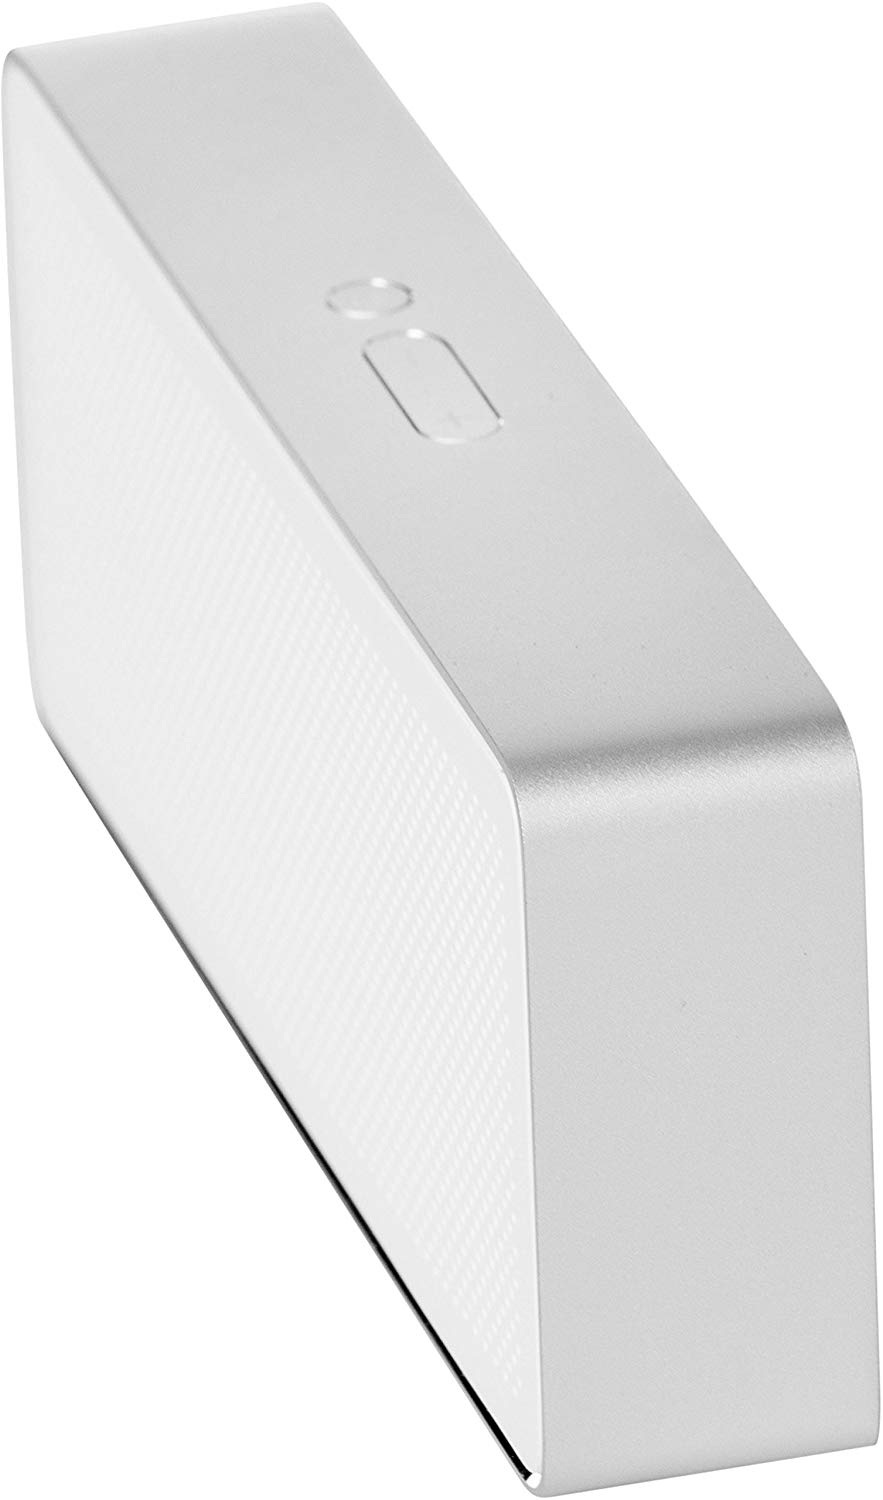 Xiaomi Mi Bluetooth Speaker Basic 2